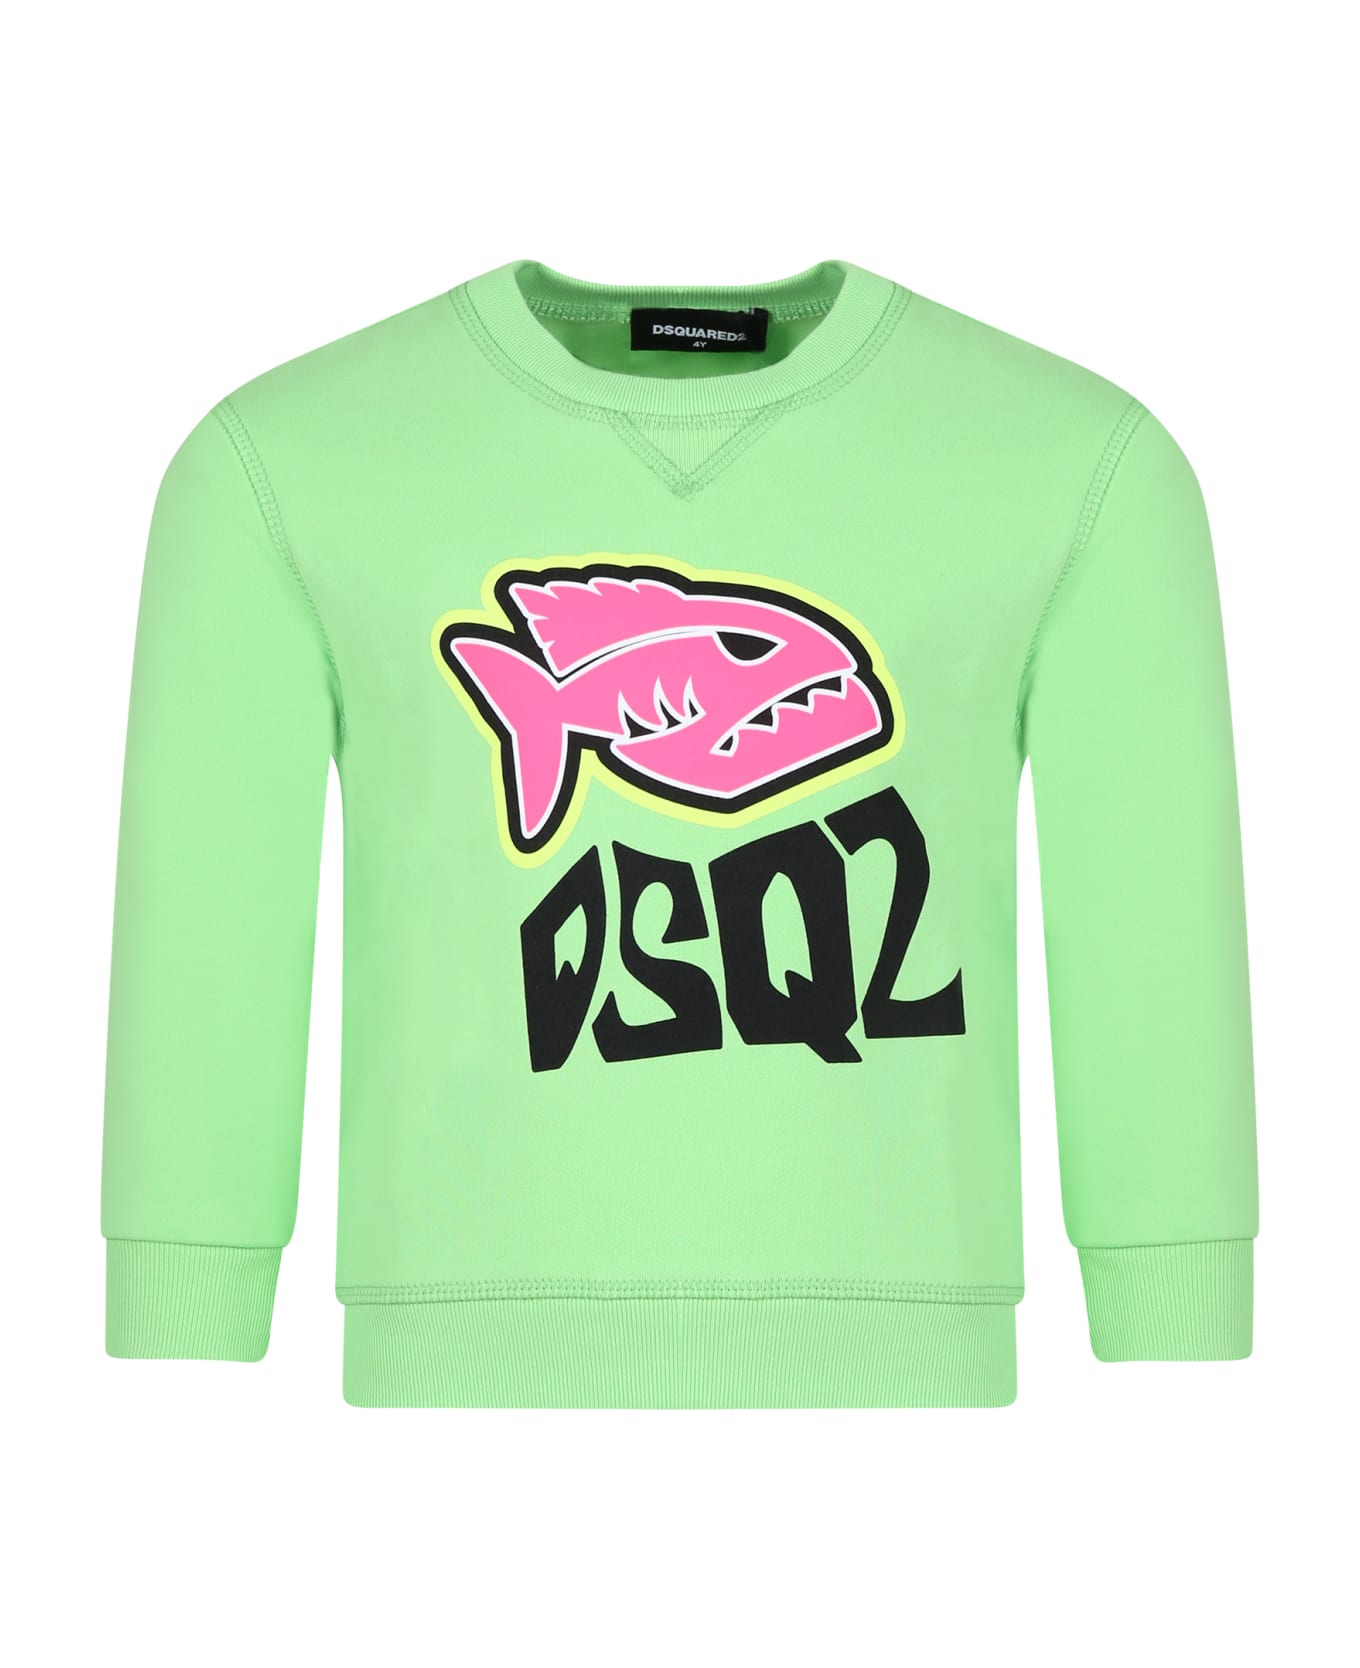 Dsquared2 Green Sweatshirt For Boy With Logo And Print - Green ニットウェア＆スウェットシャツ